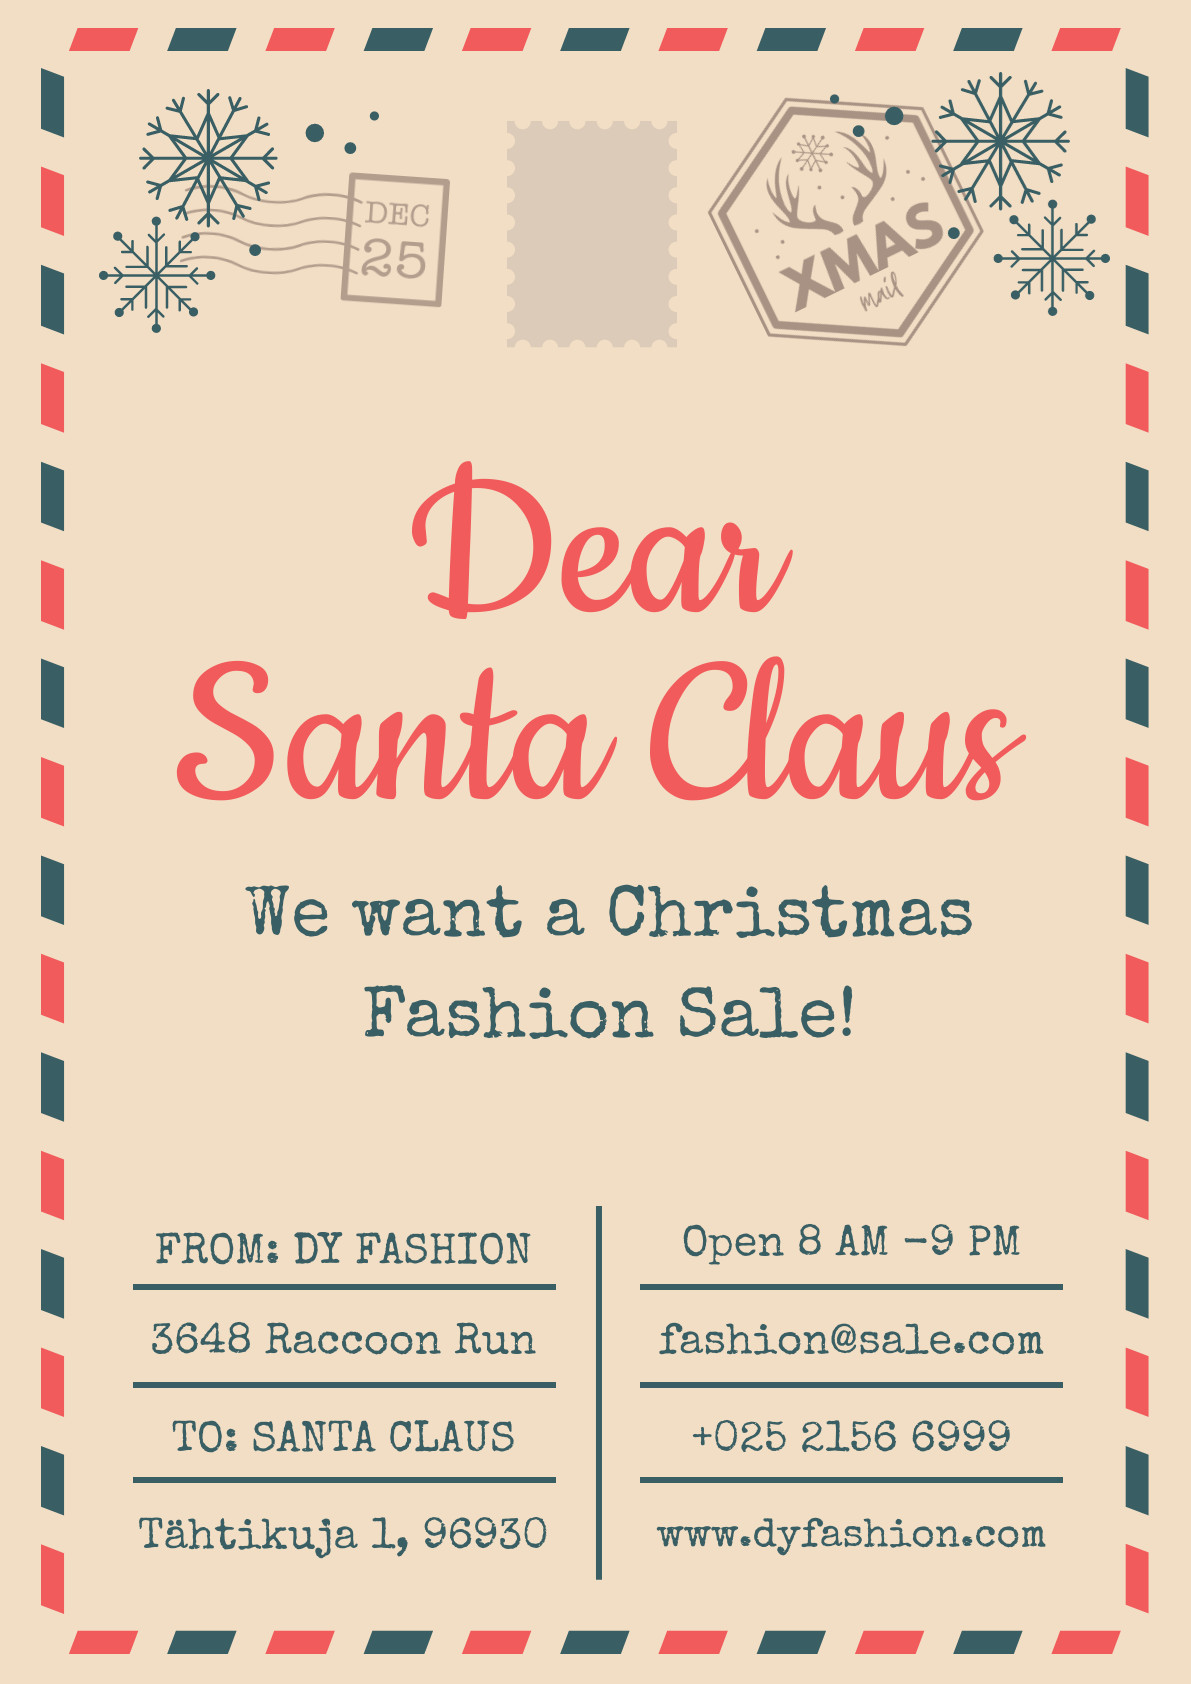 Dear Santa Claus Letter Fashion Sale Poster